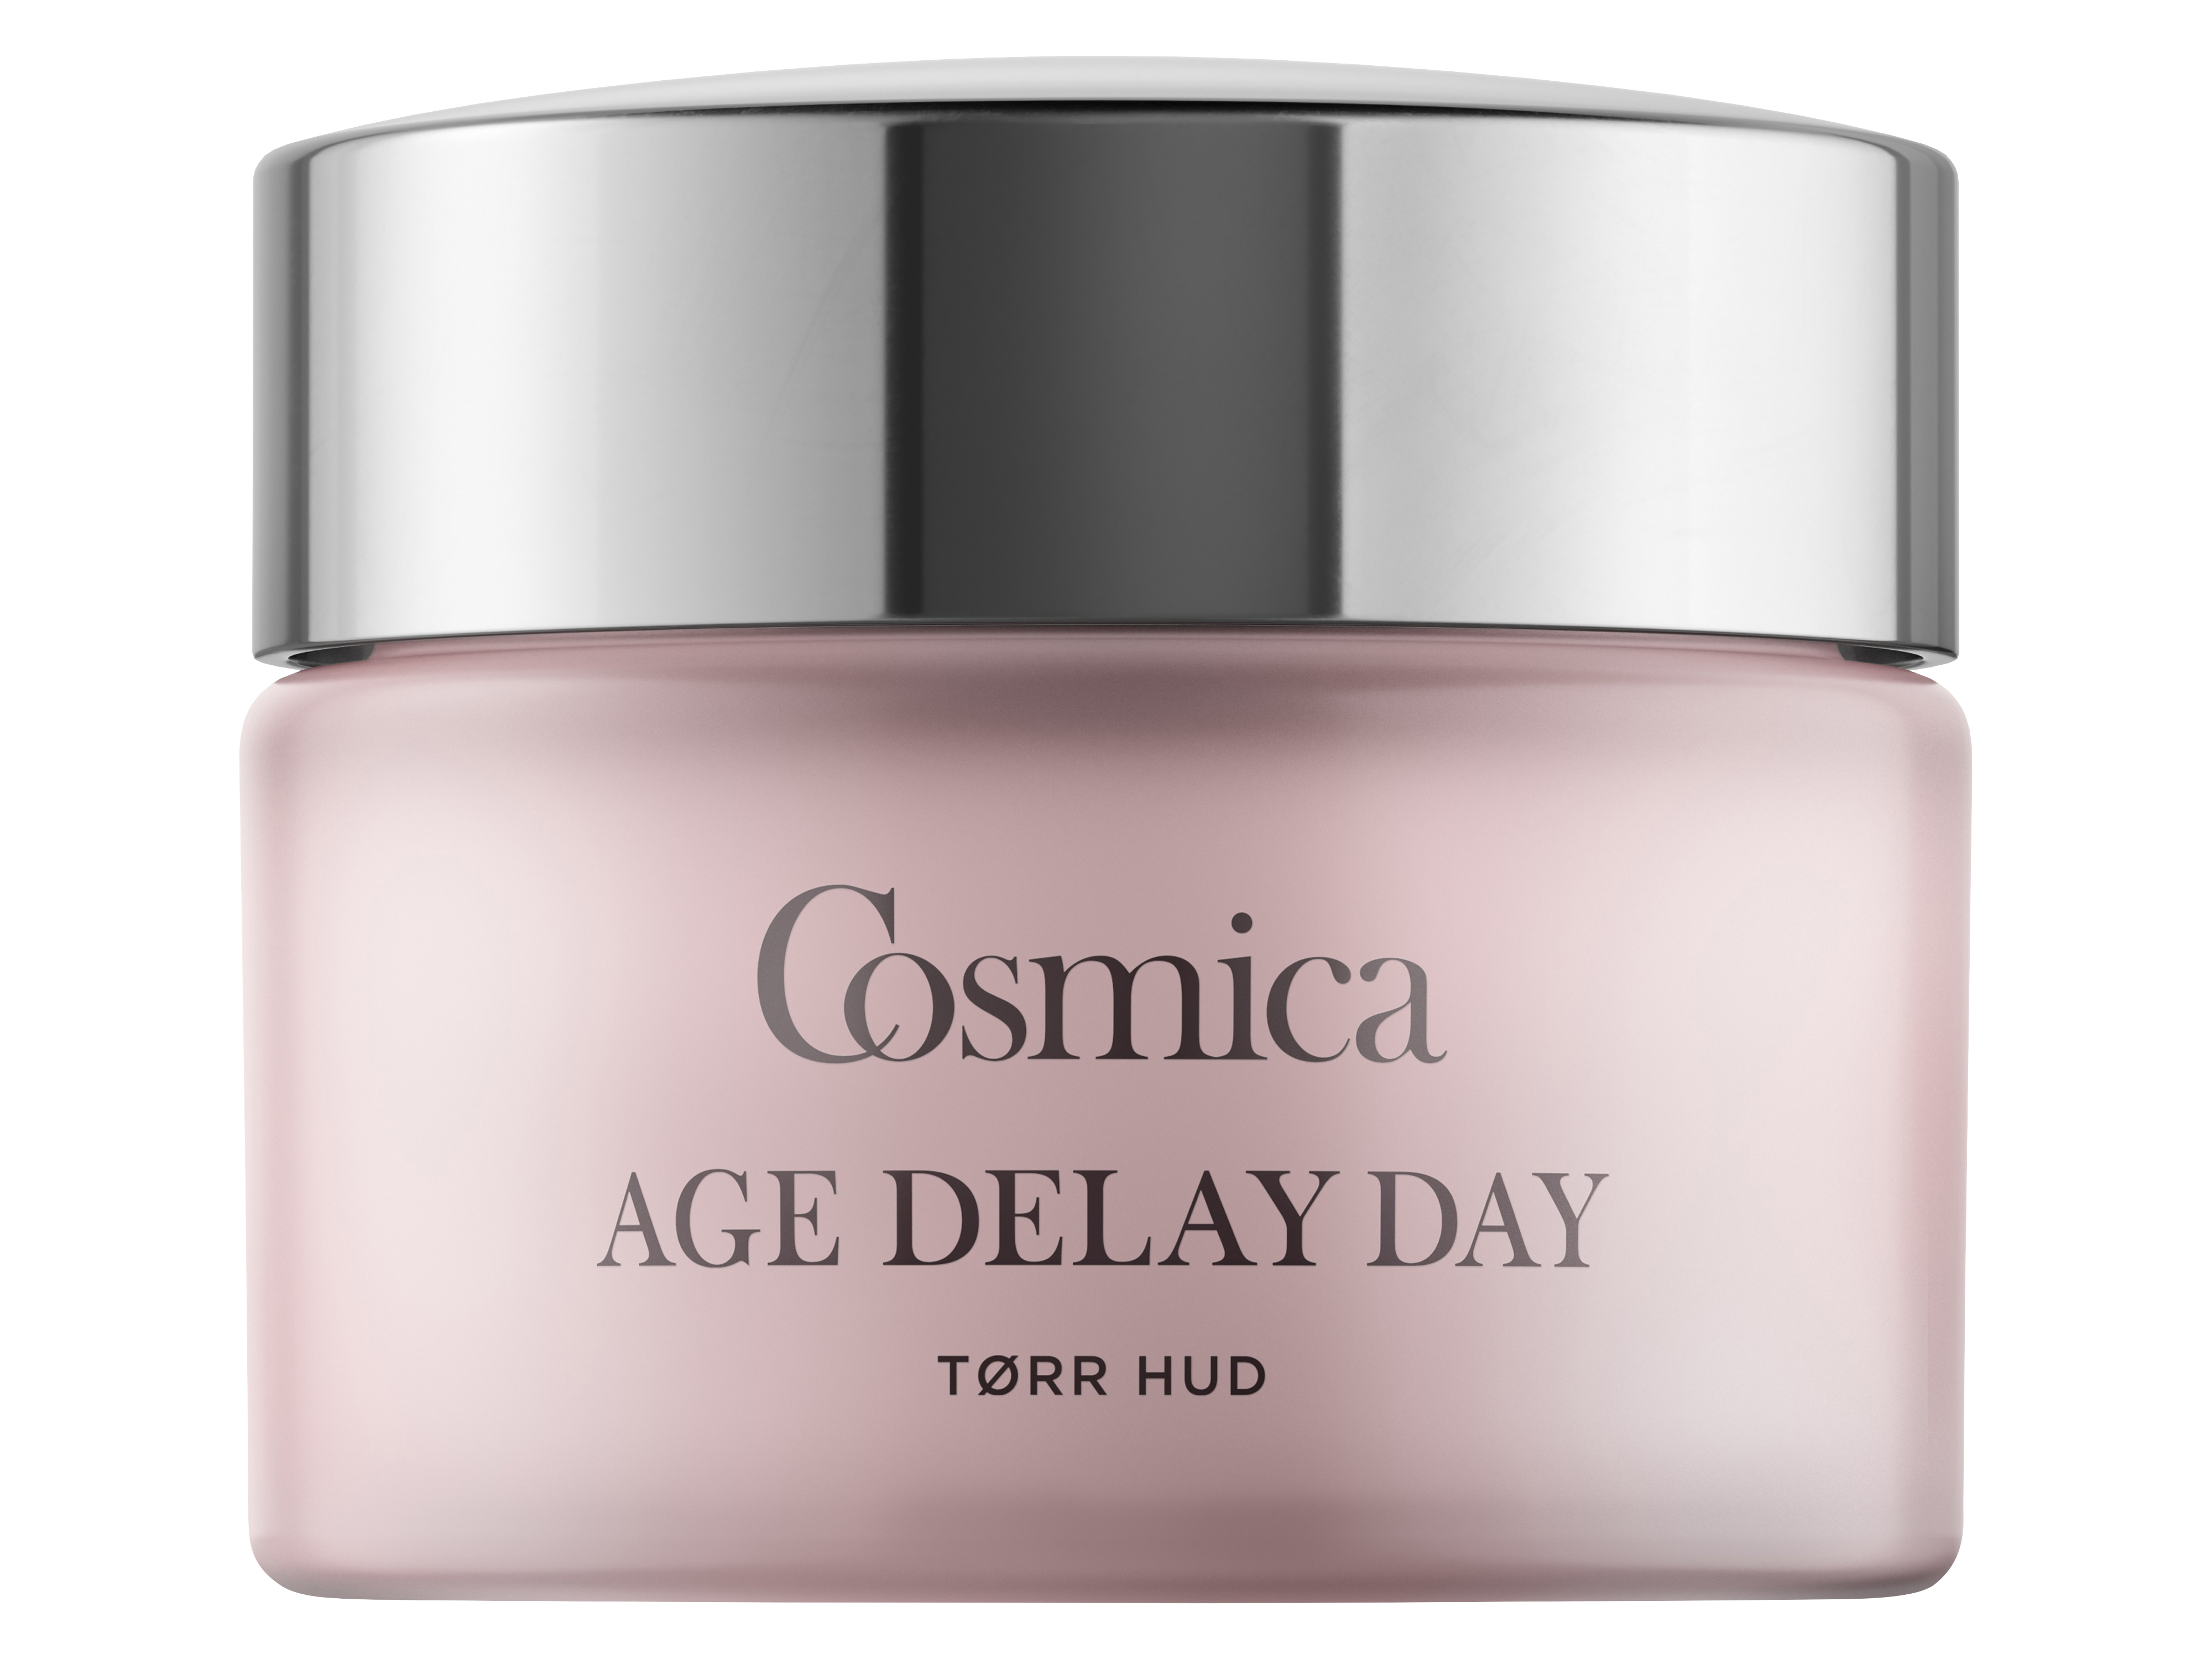 Cosmica Age Delay Day SPF15, Tørr hud, 50 ml